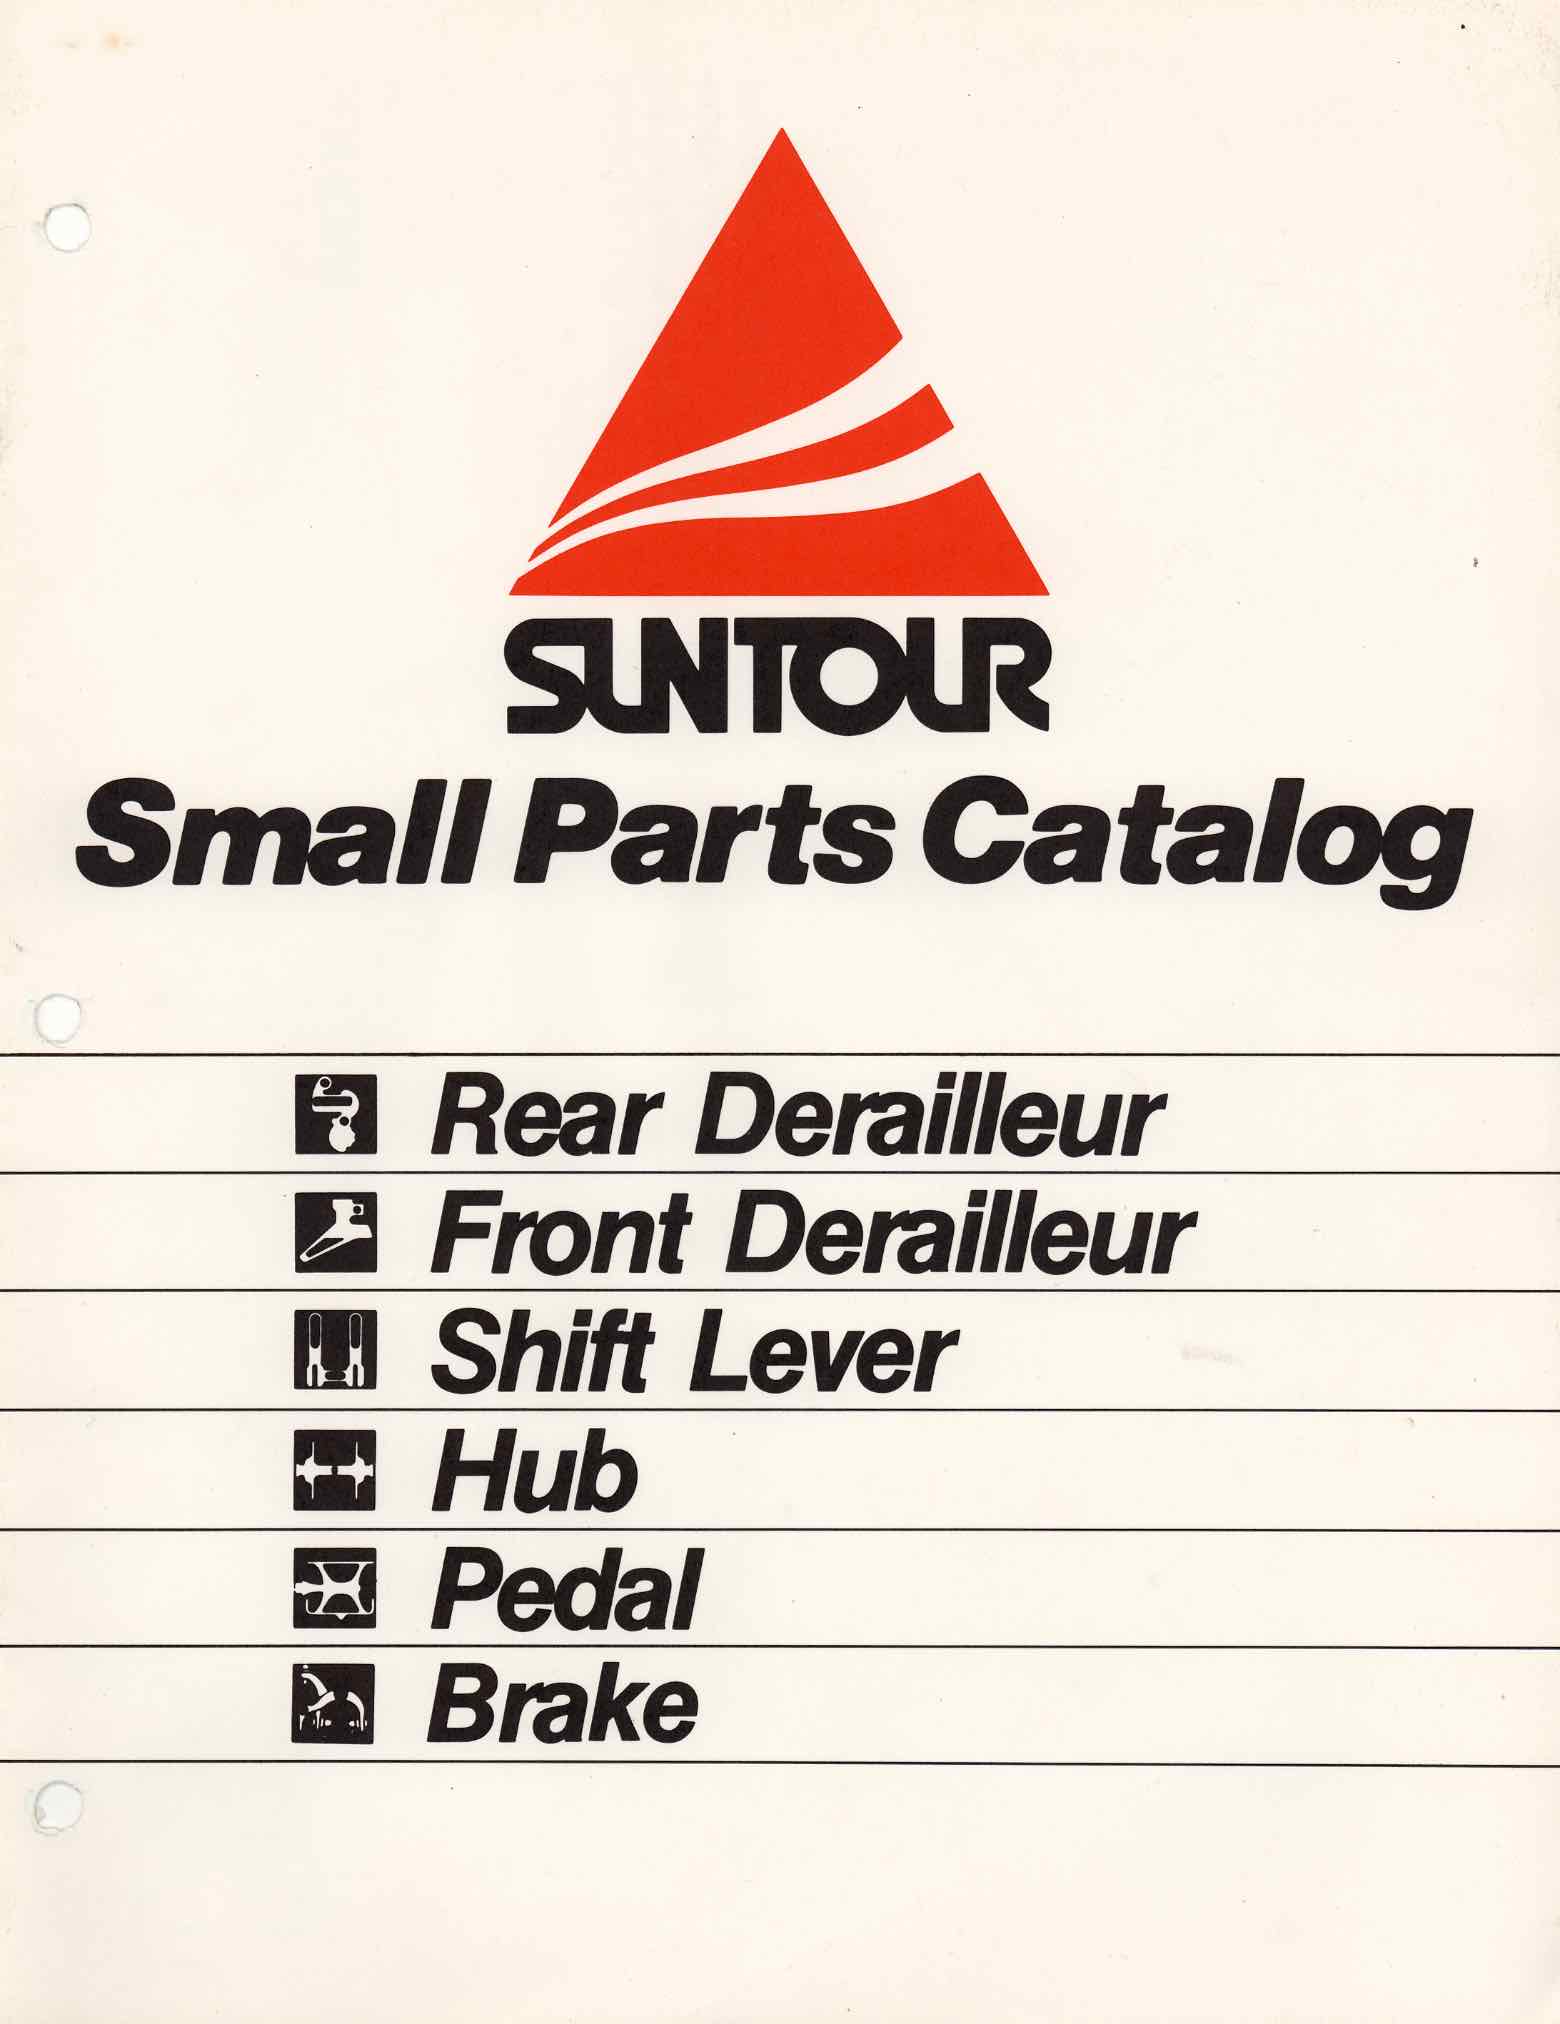 SunTour Small Parts Catalog - 1983? scan 1 main image